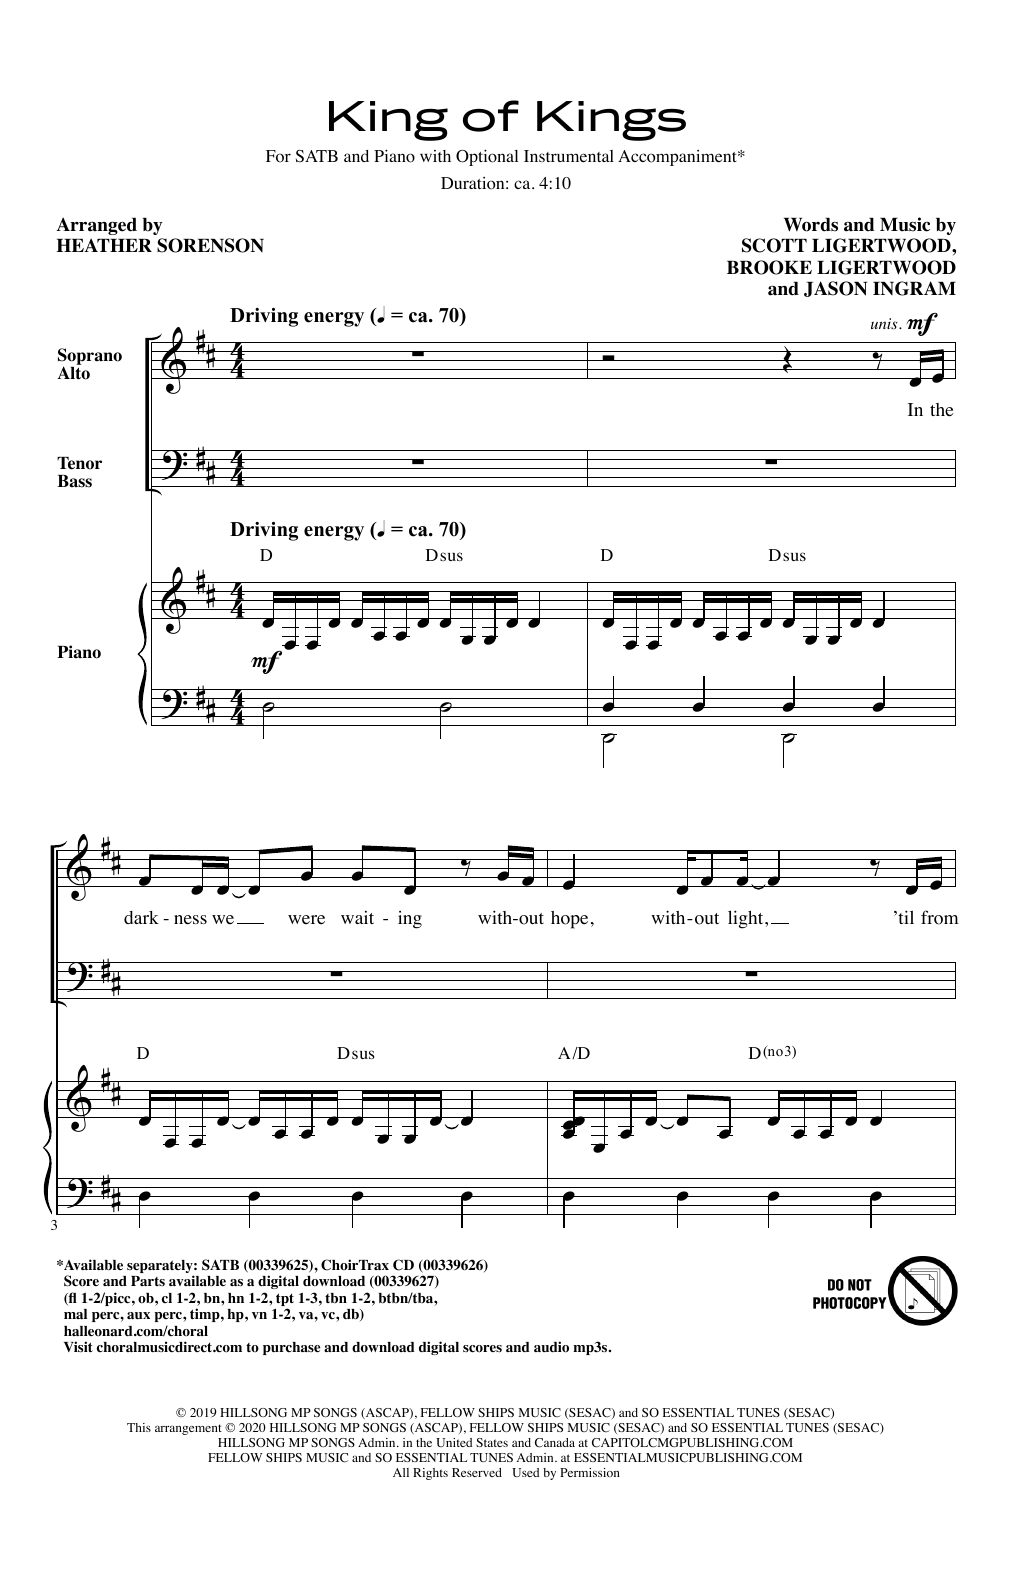 Hillsong Worship King Of Kings (arr. Heather Sorenson) Sheet Music Notes & Chords for SATB Choir - Download or Print PDF